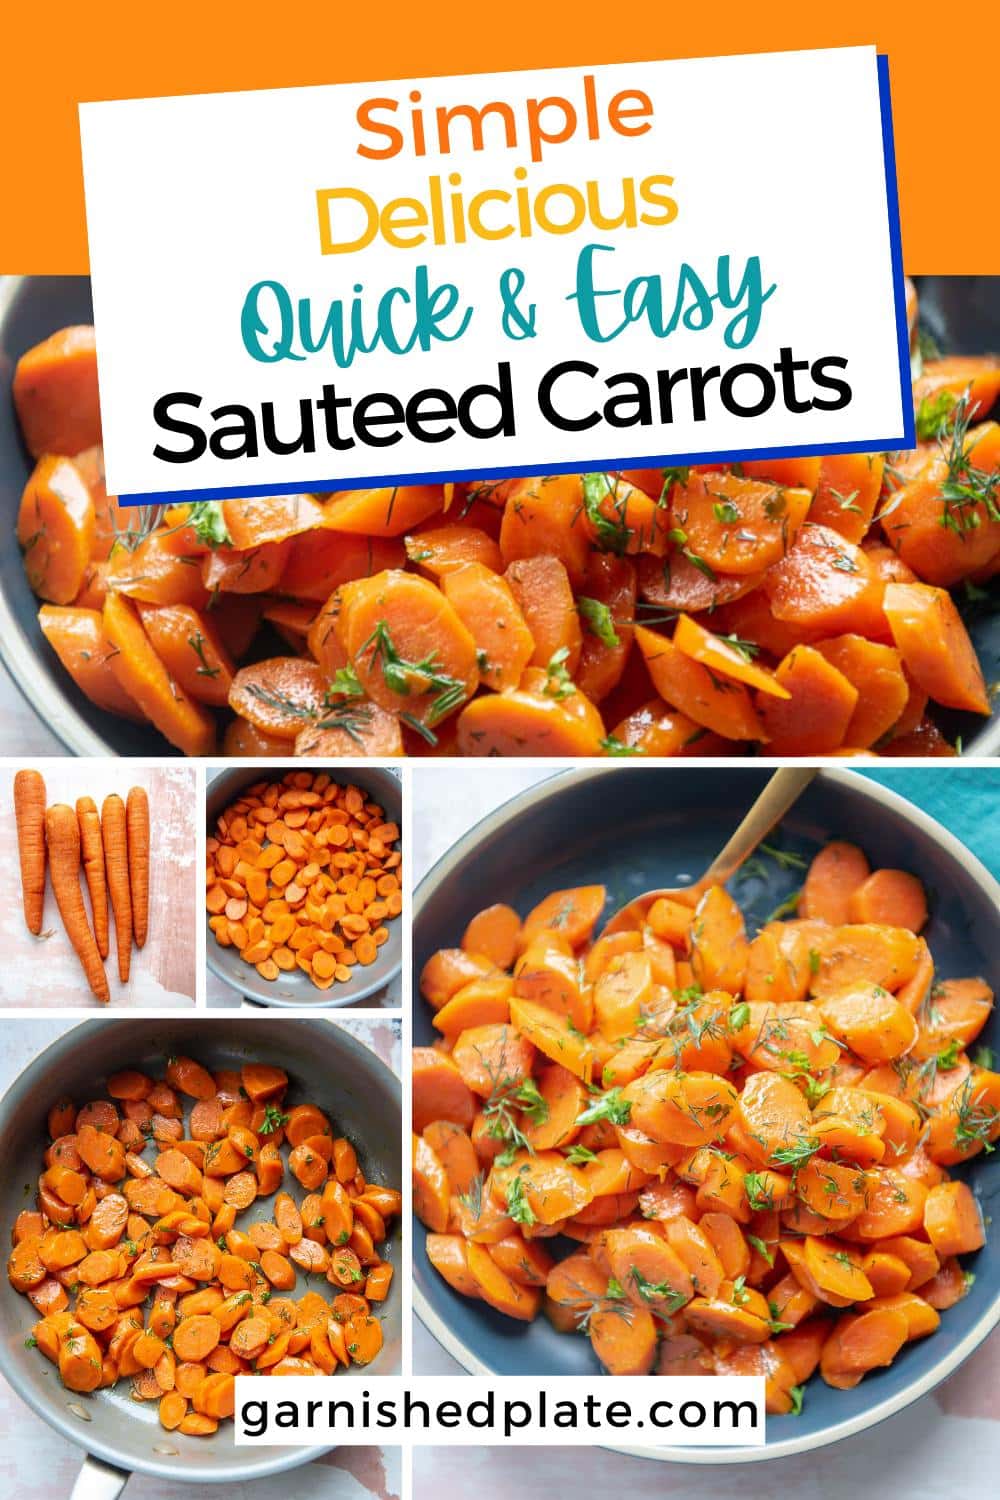 Sauteed Carrots - Garnished Plate